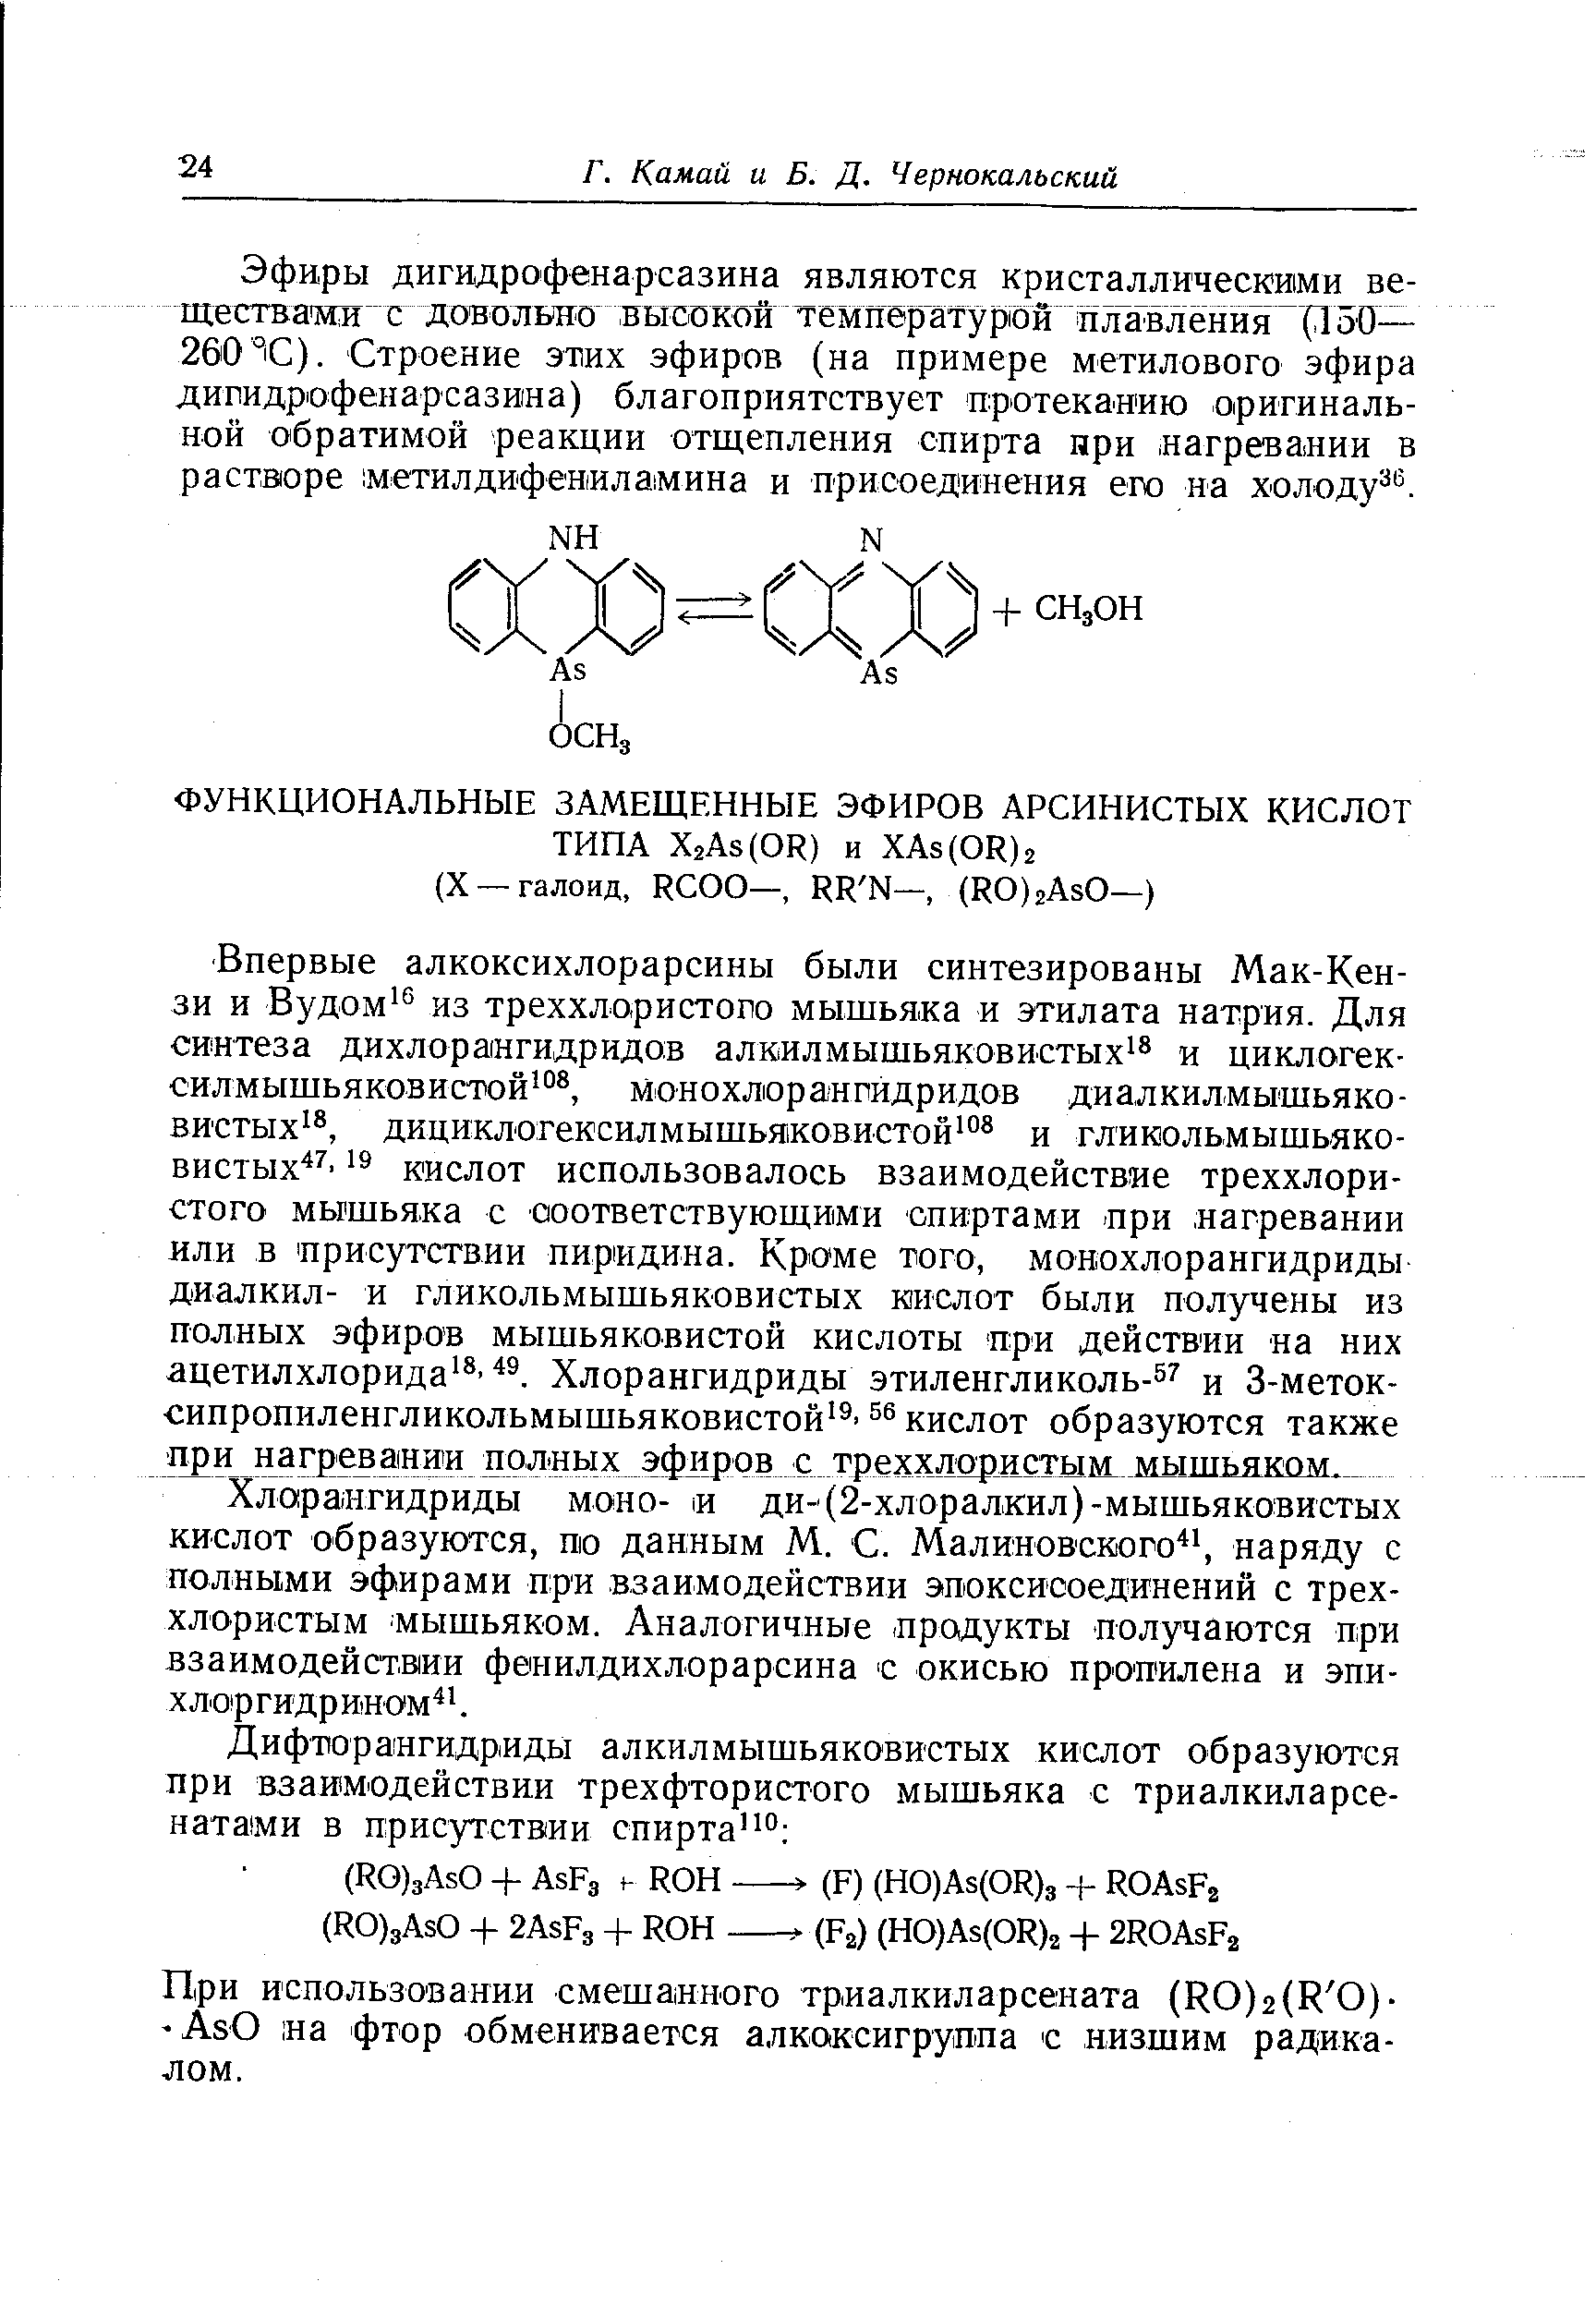 При использо вании смешанного триалкиларсената (R0)2(R 0)- AsO на фтор обменивается алкоксигрупп а С низшим радикалом.